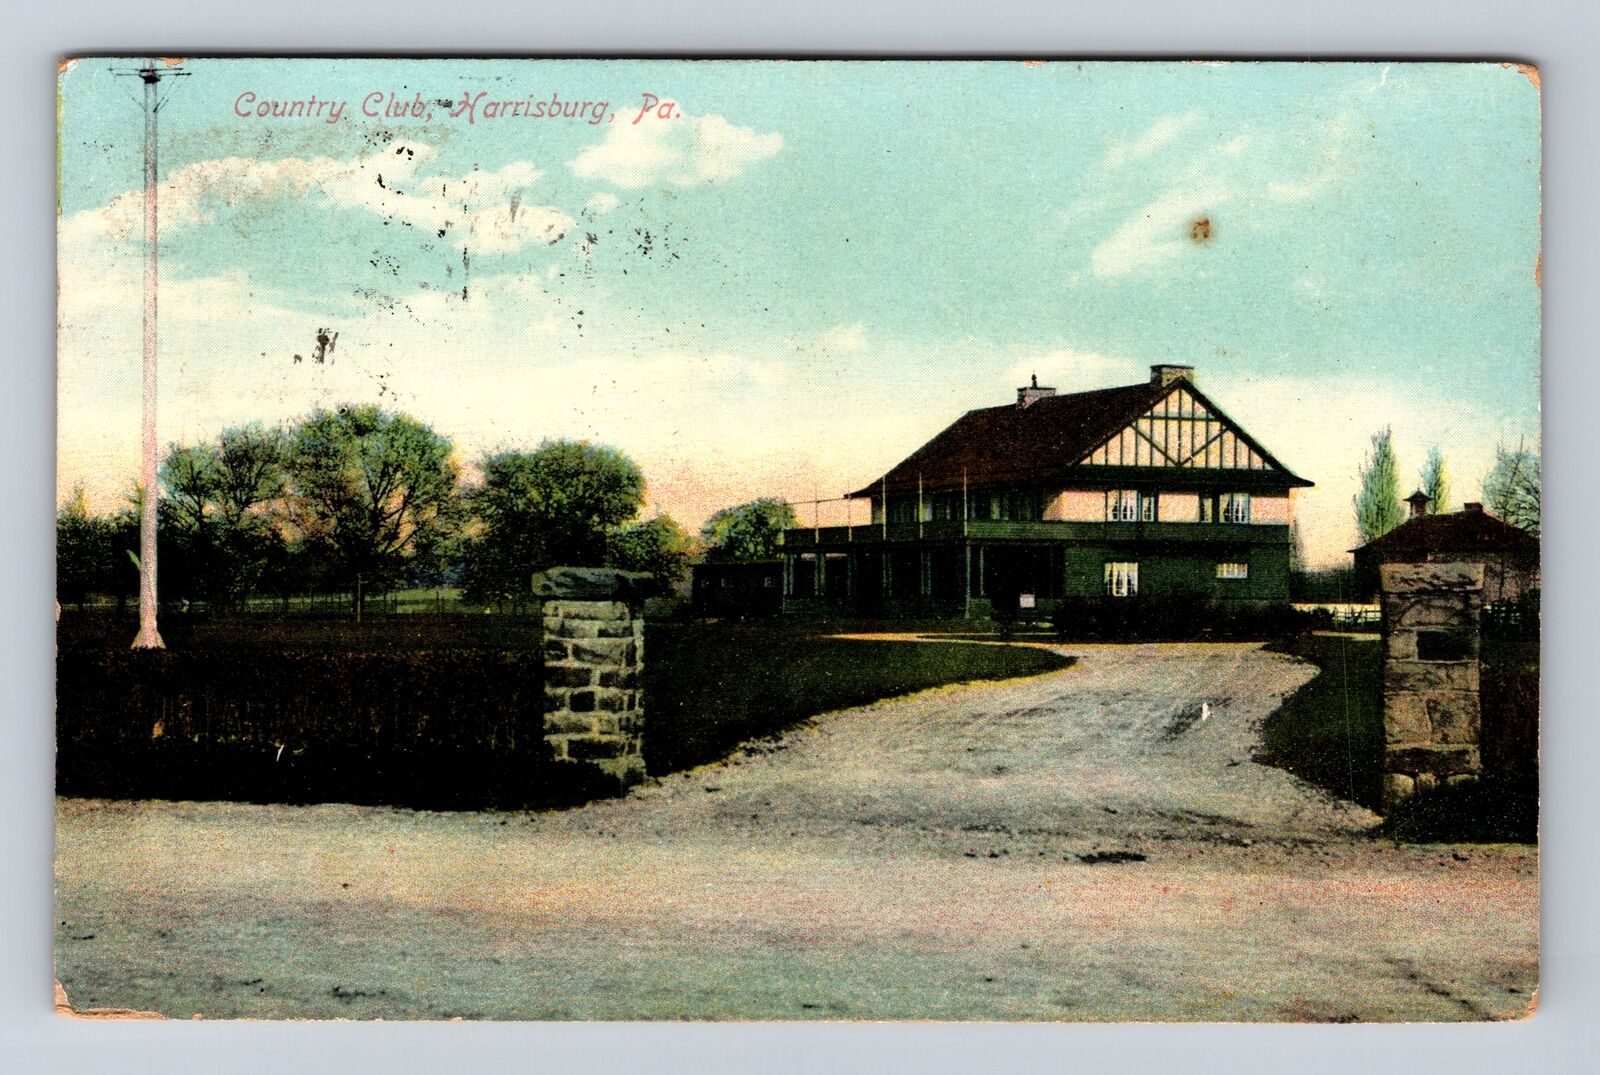 Harrisburg PA-Pennsylvania, Country Club, Antique Vintage Souvenir Postcard